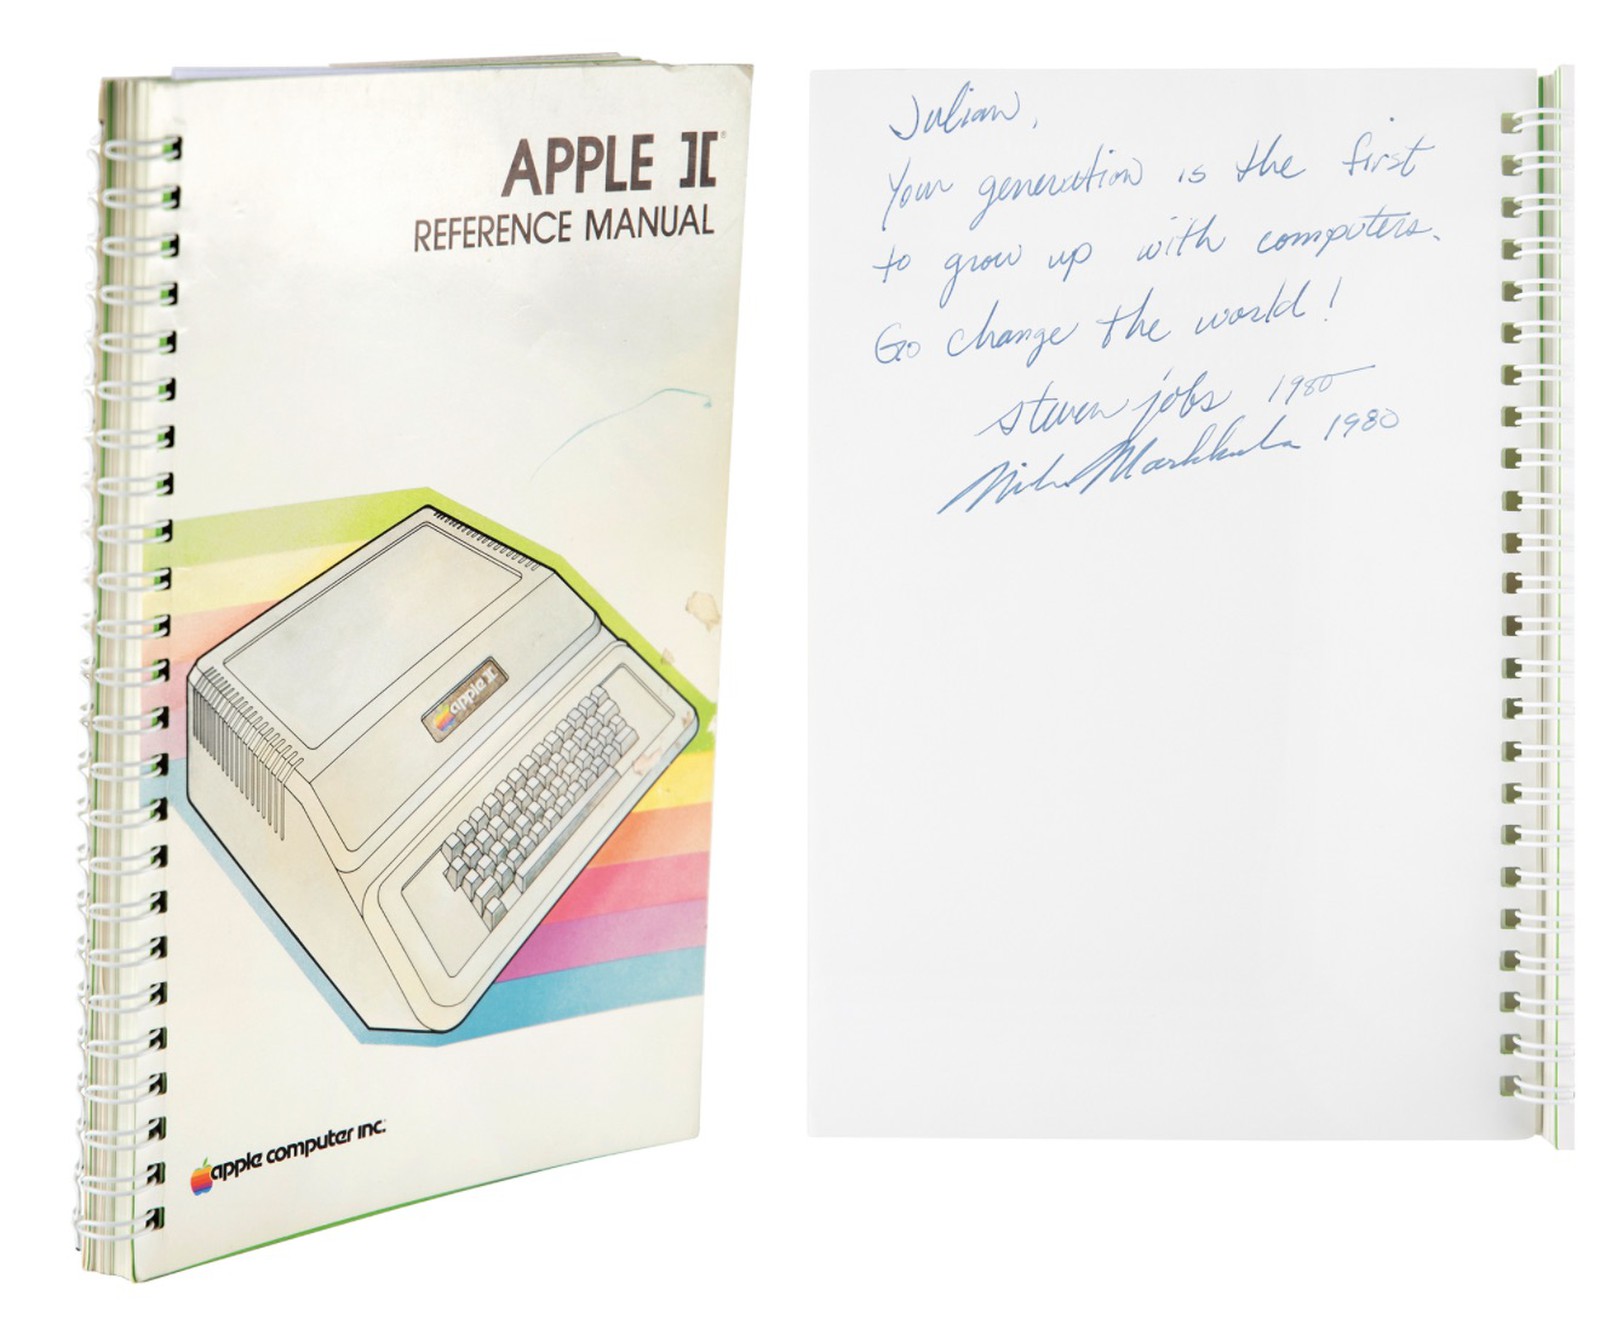 steve-jobs-signed-apple-ii-manual.jpg